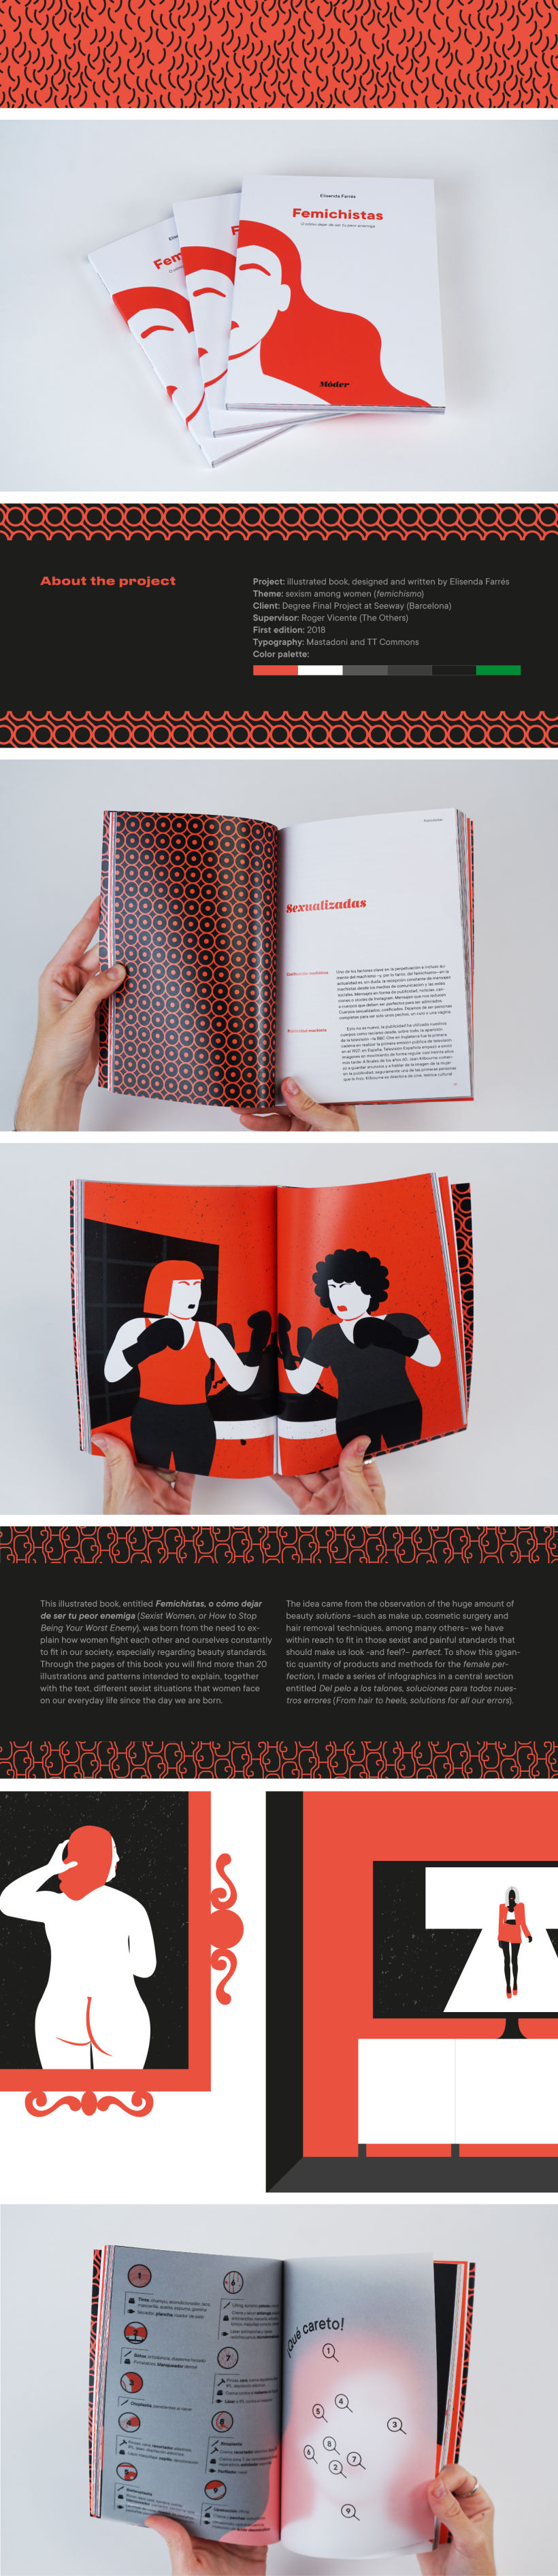 Femichistas - libro feminista ilustrado -1